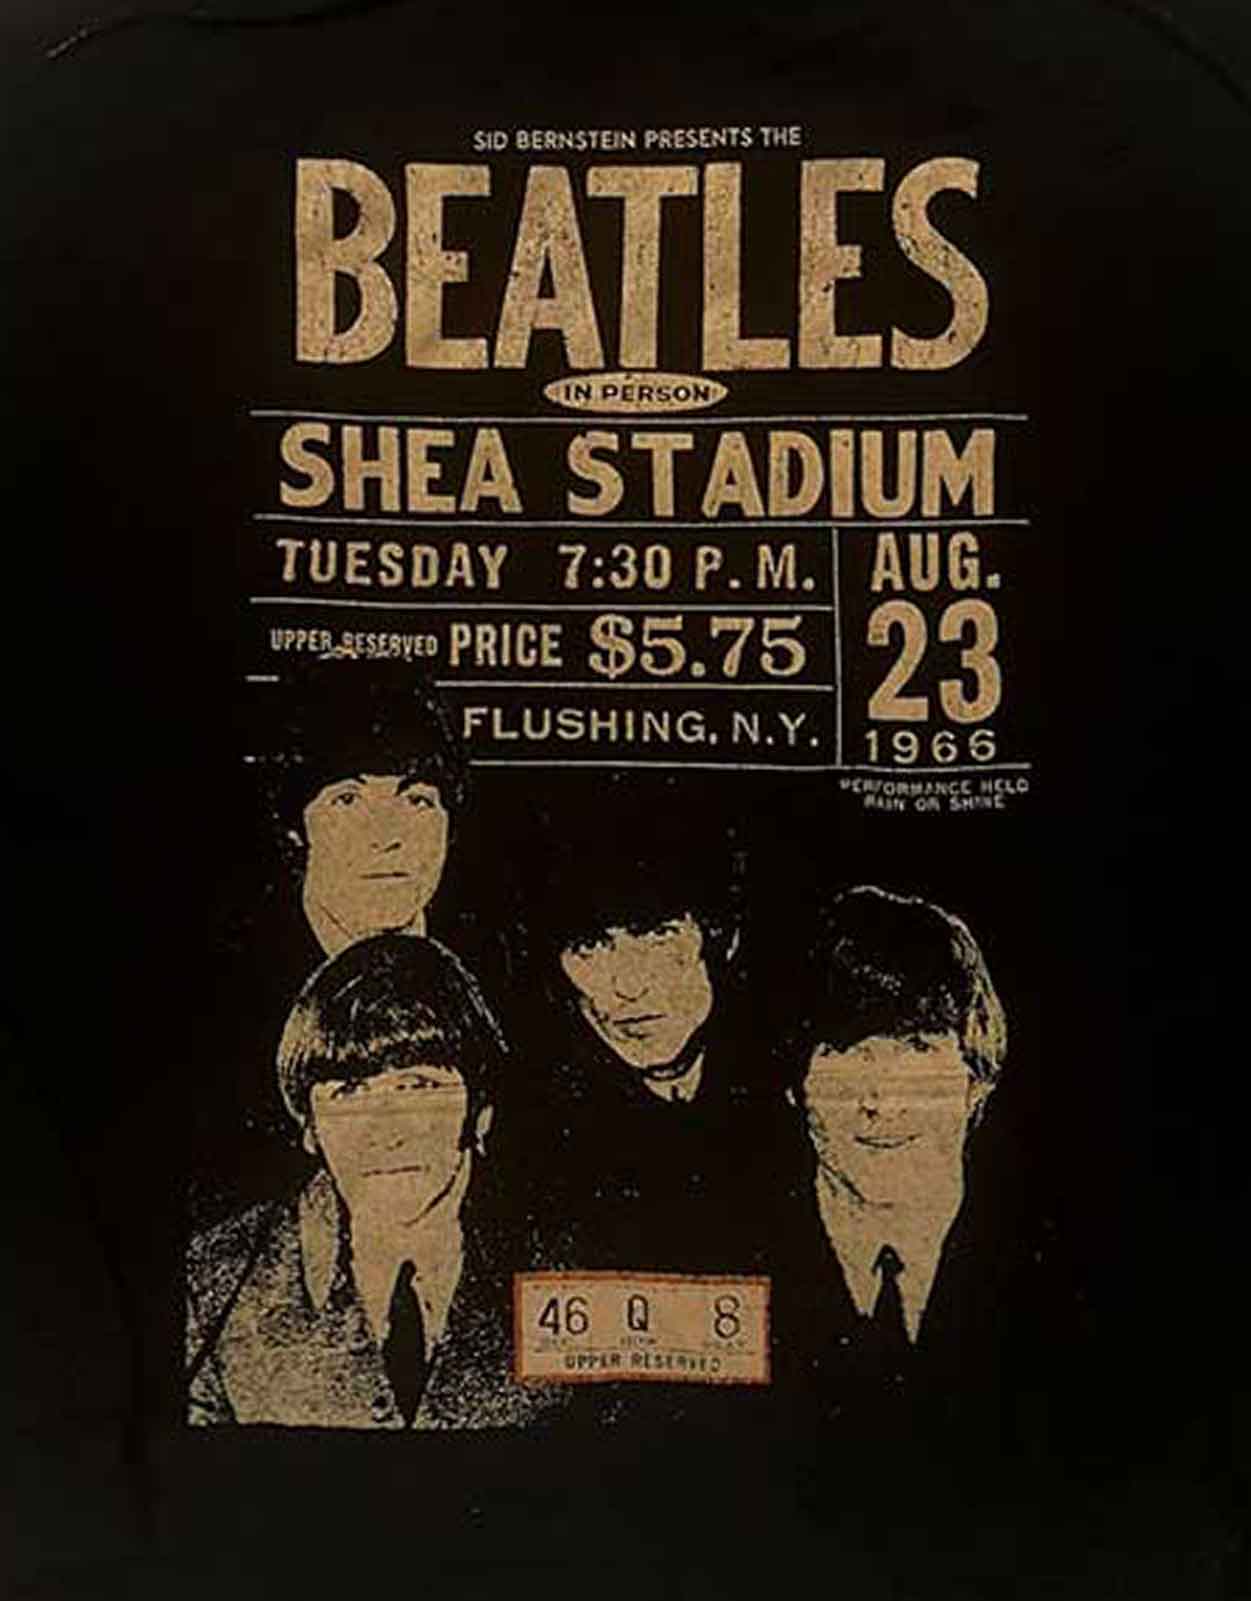 The Beatles Shea Stadium 1966 Pullover Hoodie